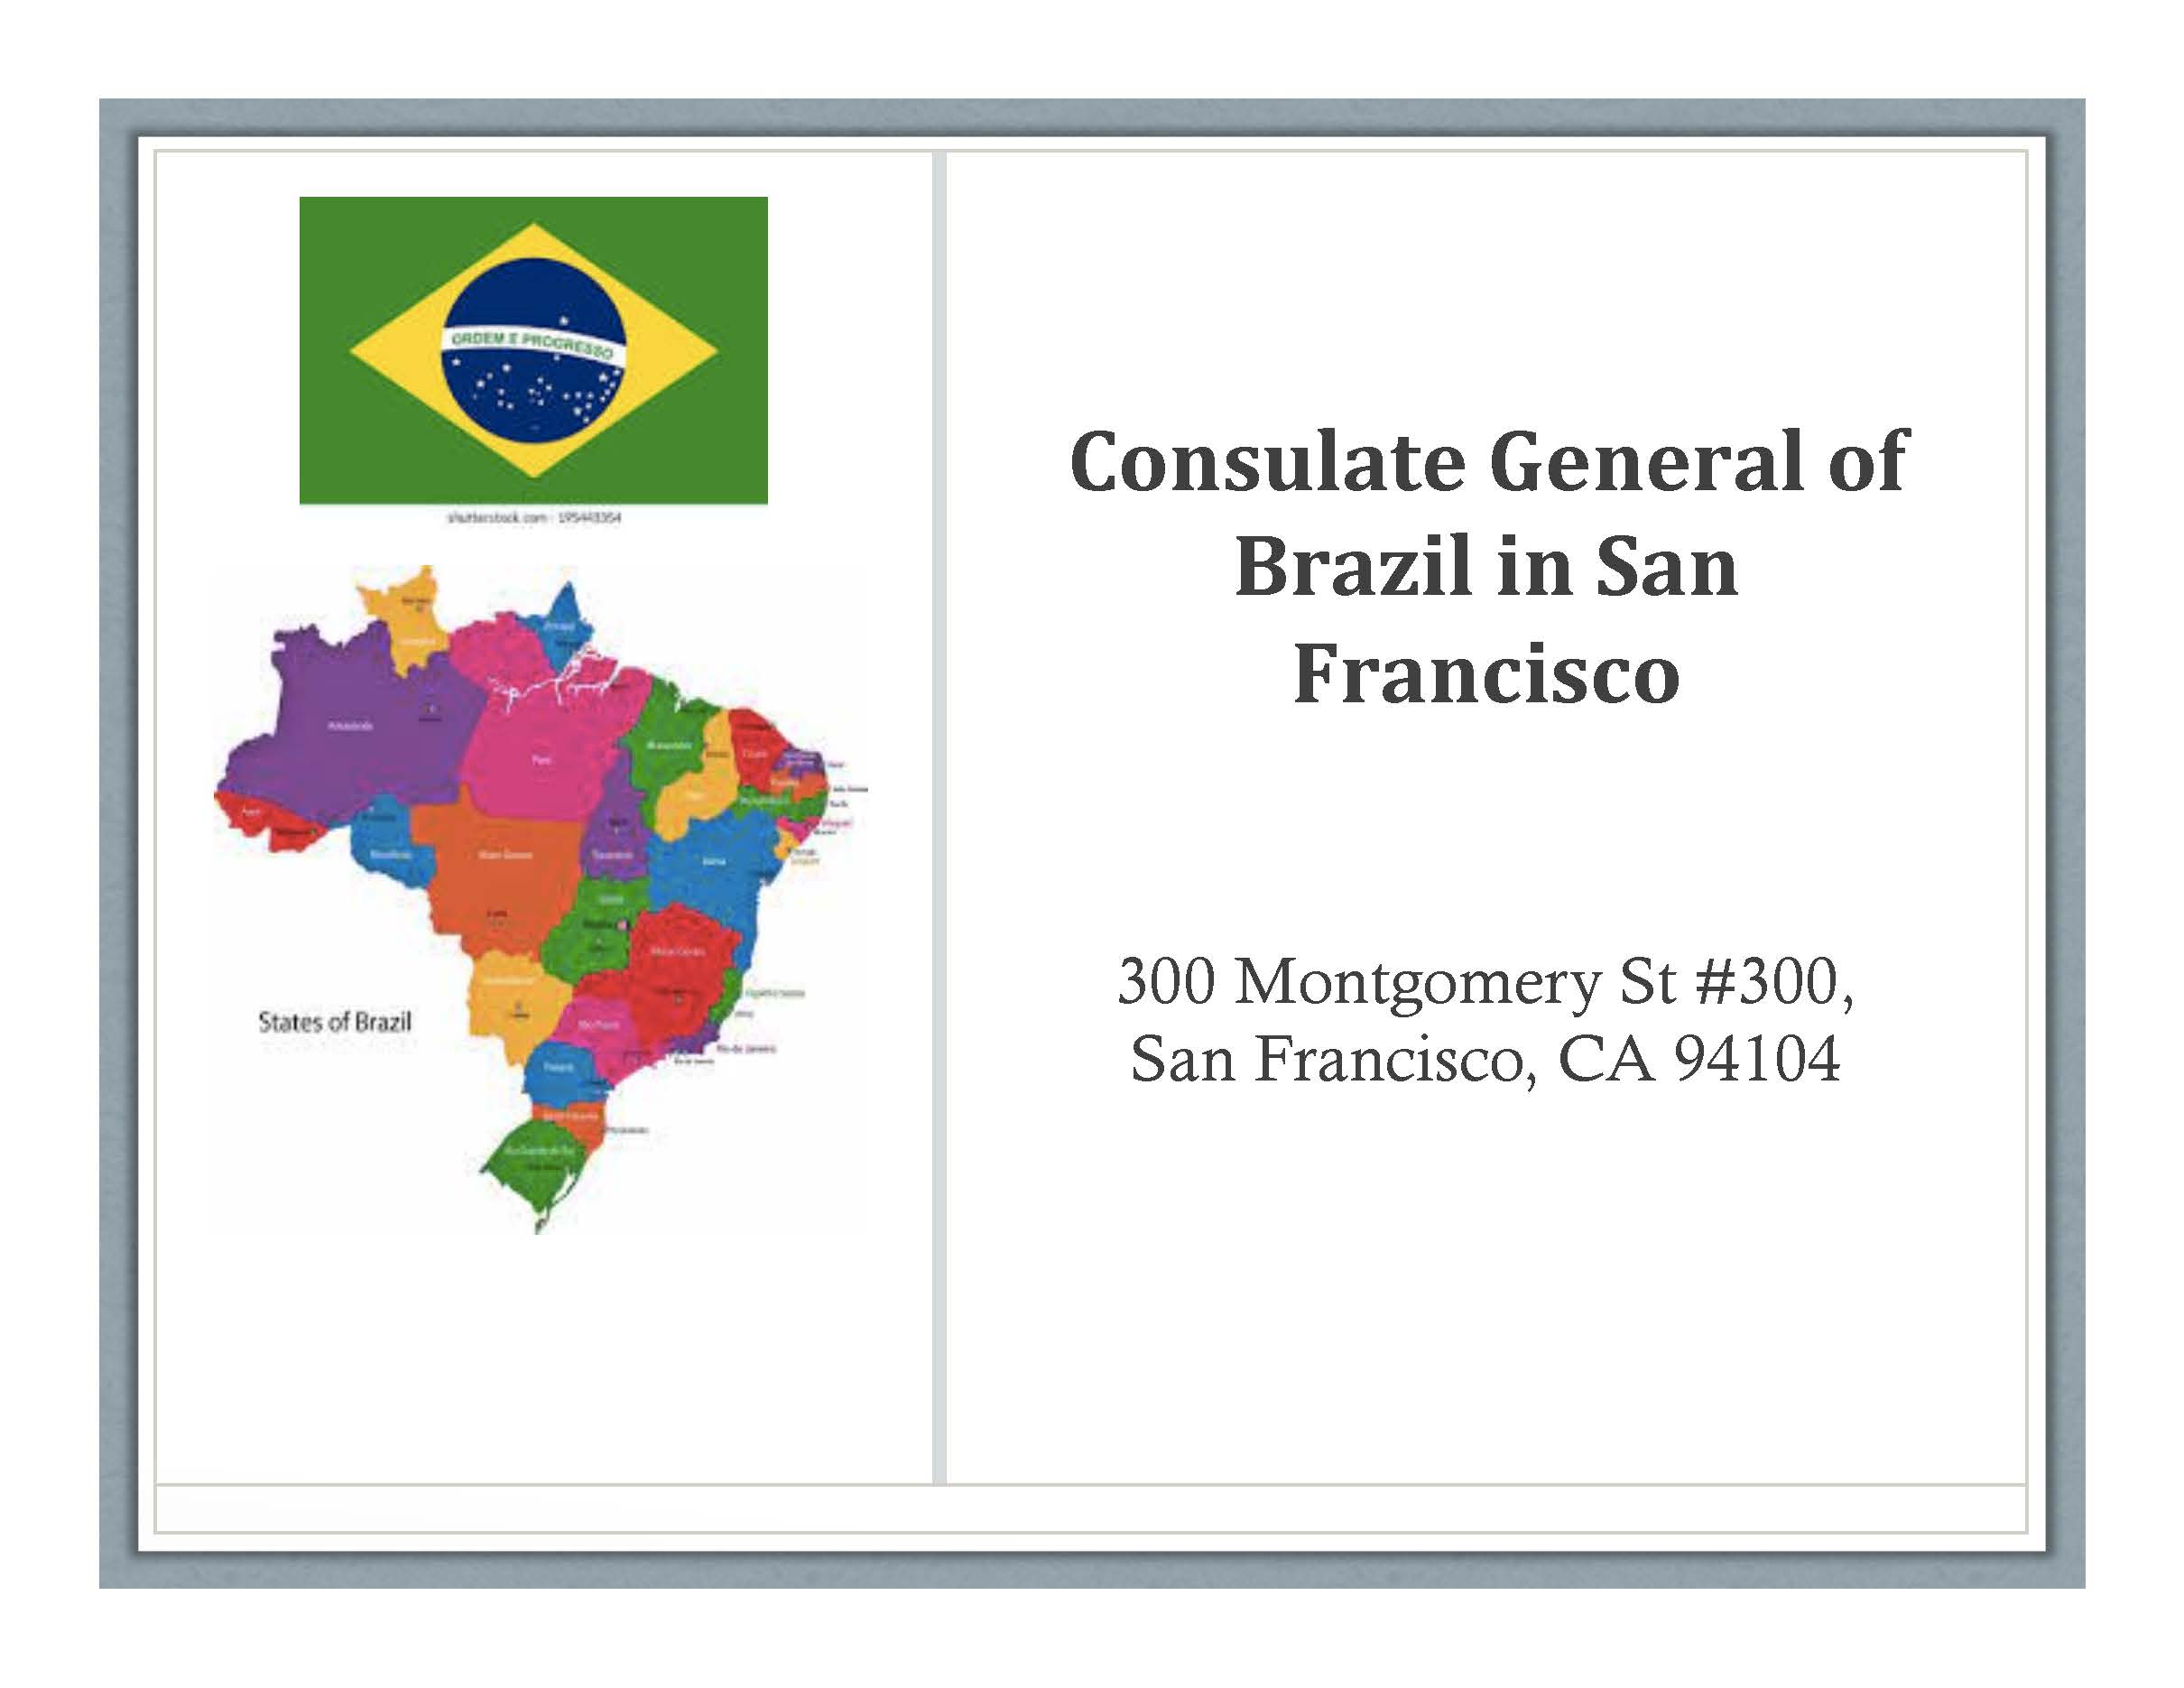 Consulate General of Brazil in San Francisco: 300 Montgomery St #300 San Francisco, CA 94104